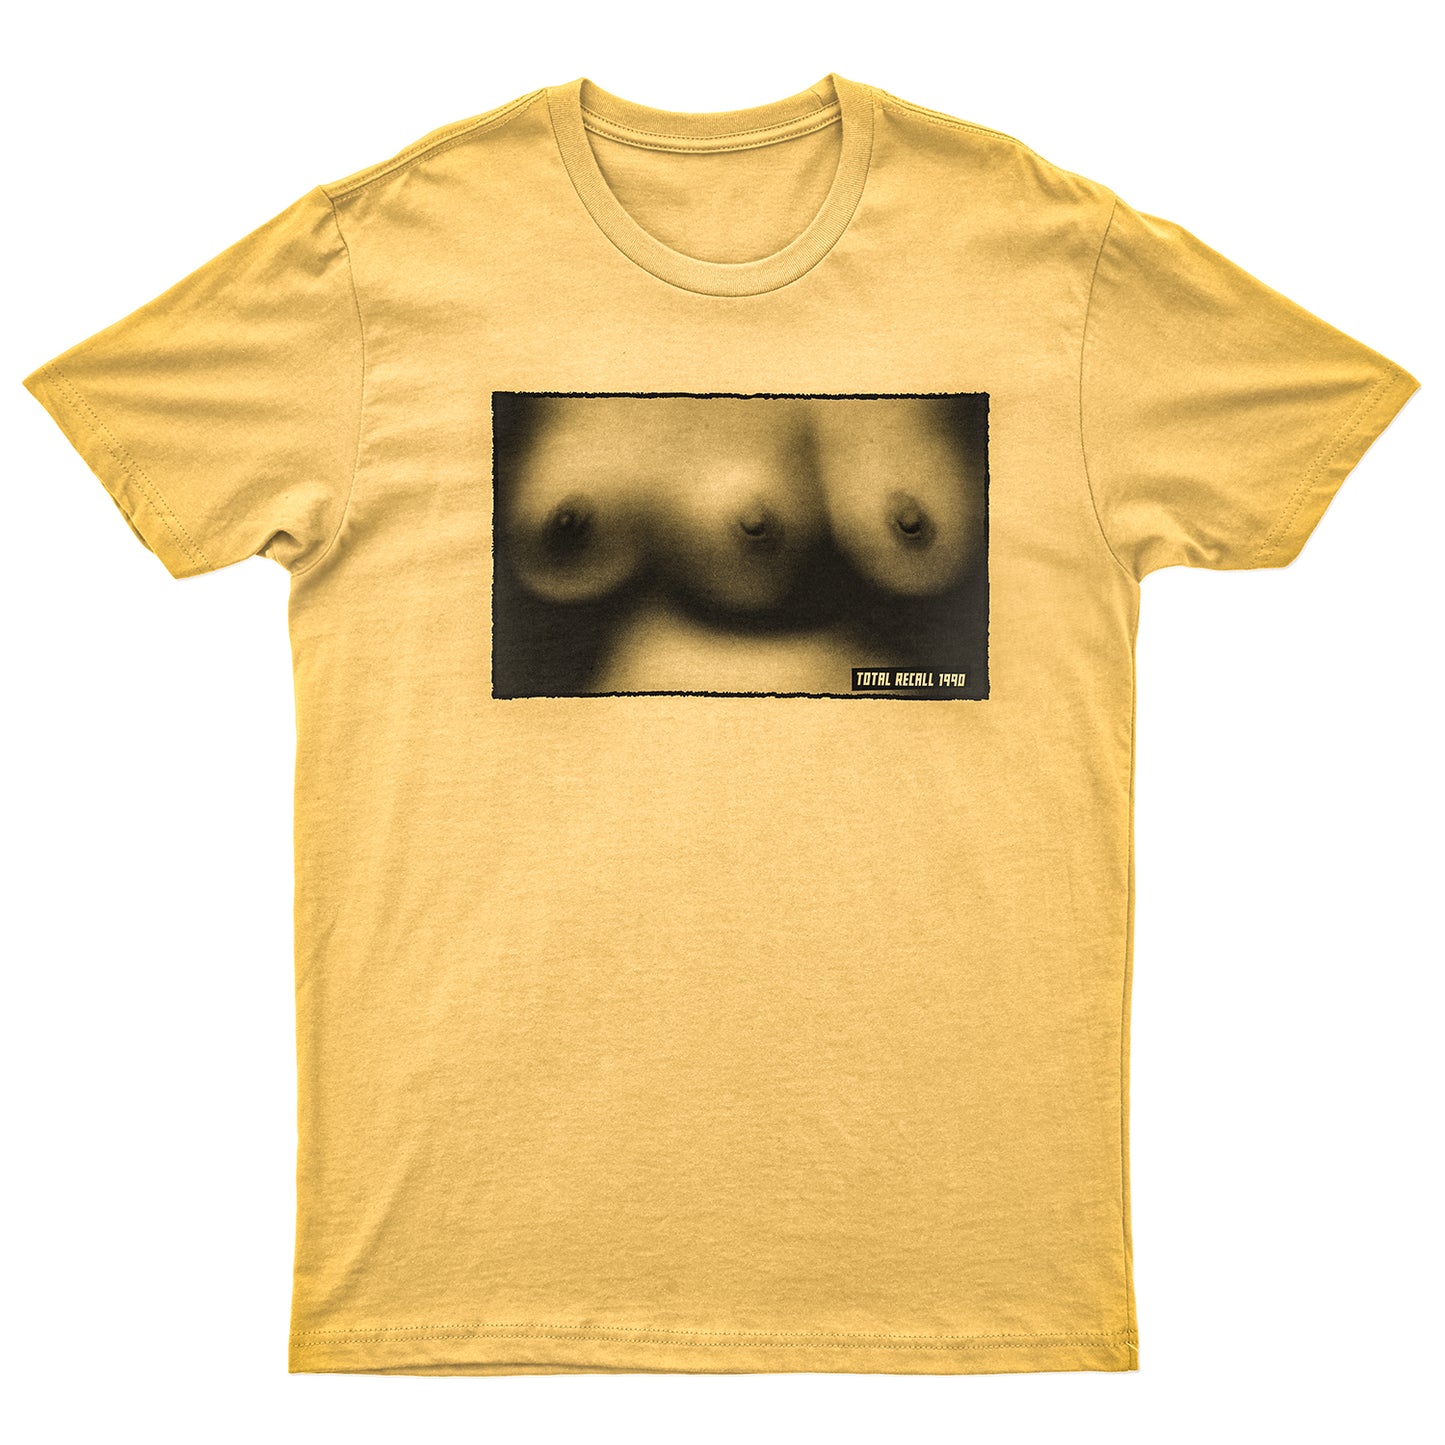 CUC T-Shirt  ATTO DI FORZA WESTWOOD - Total Recall - Cult Shirts  #chooseurcolor